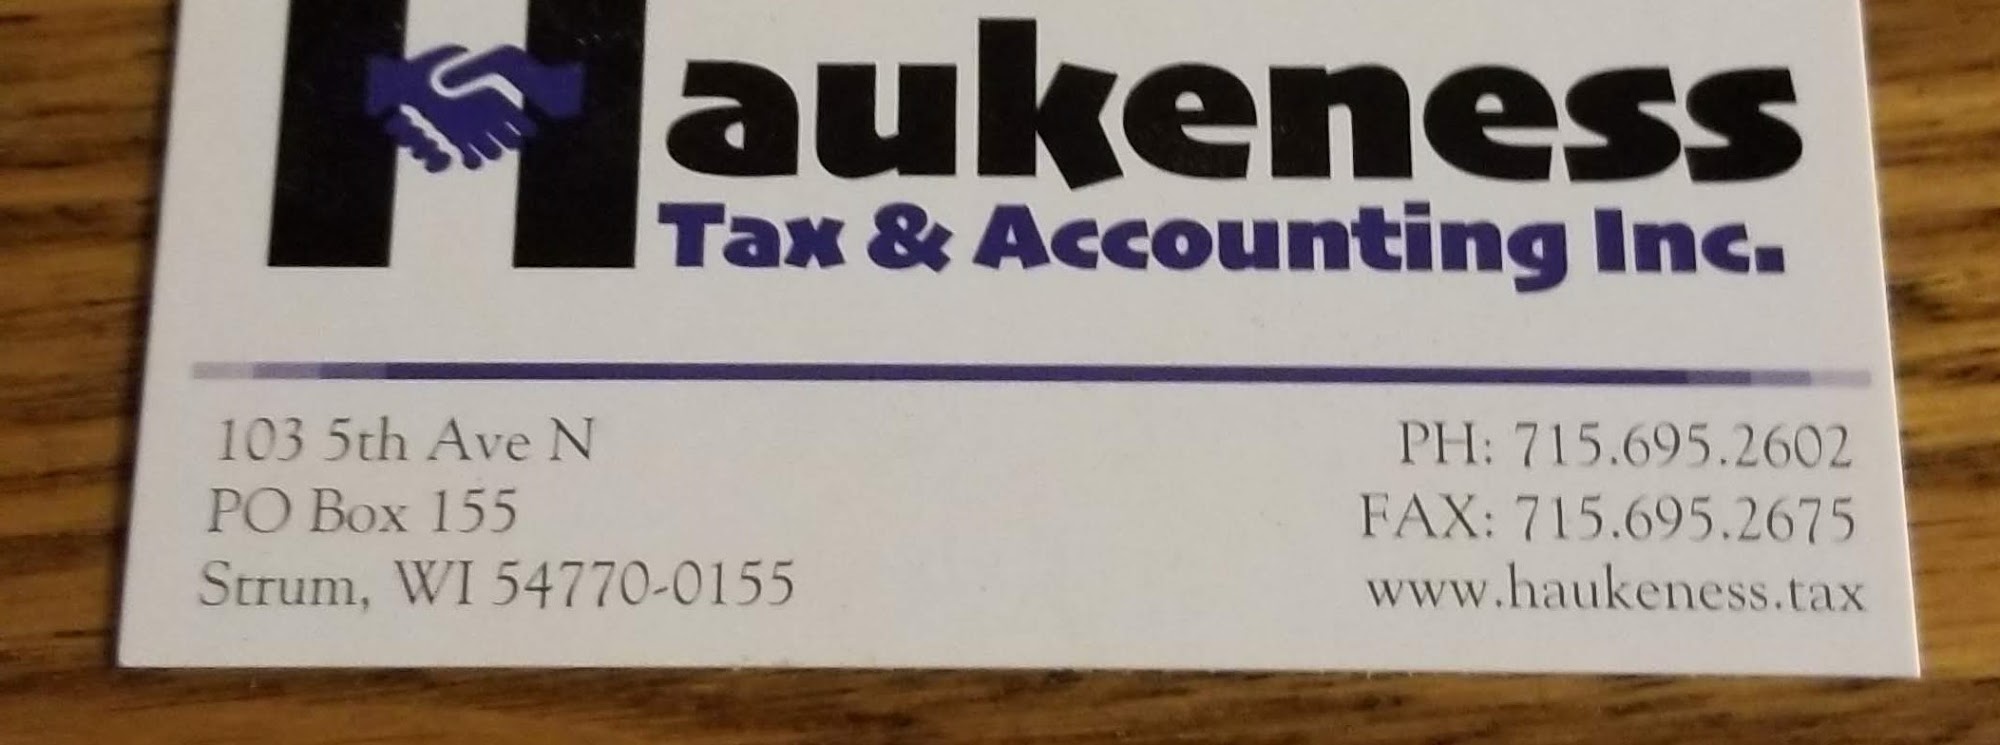 Haukeness Tax & Accounting Inc 103 5th Avenue North, Strum Wisconsin 54770